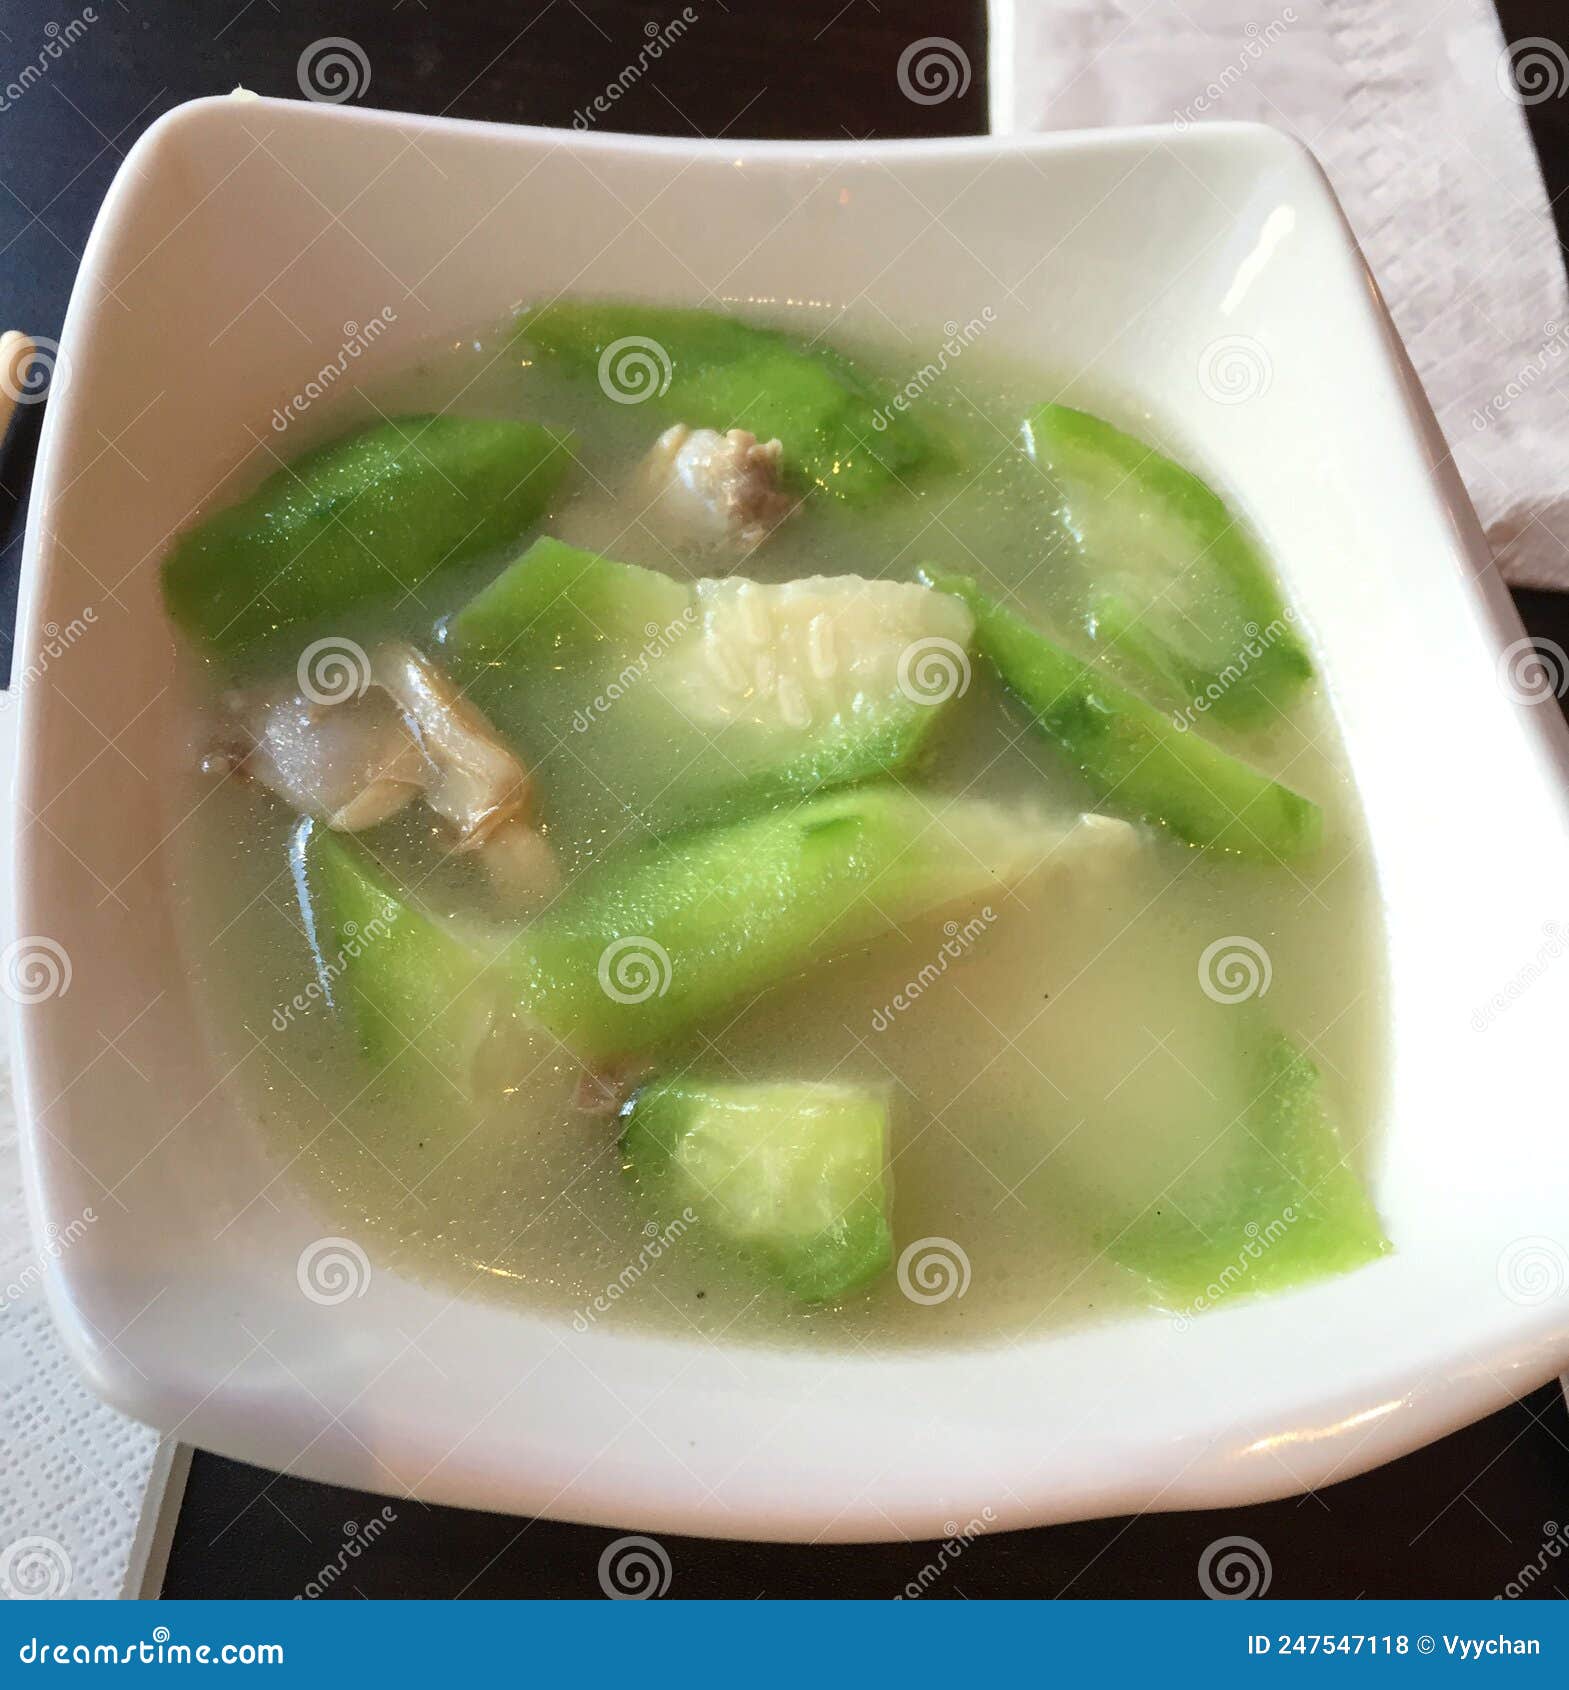 taiwanese cuisine du hsiao yueh fresh hot springs melon soup vitamin nutrients vegan diet vegetarian snack